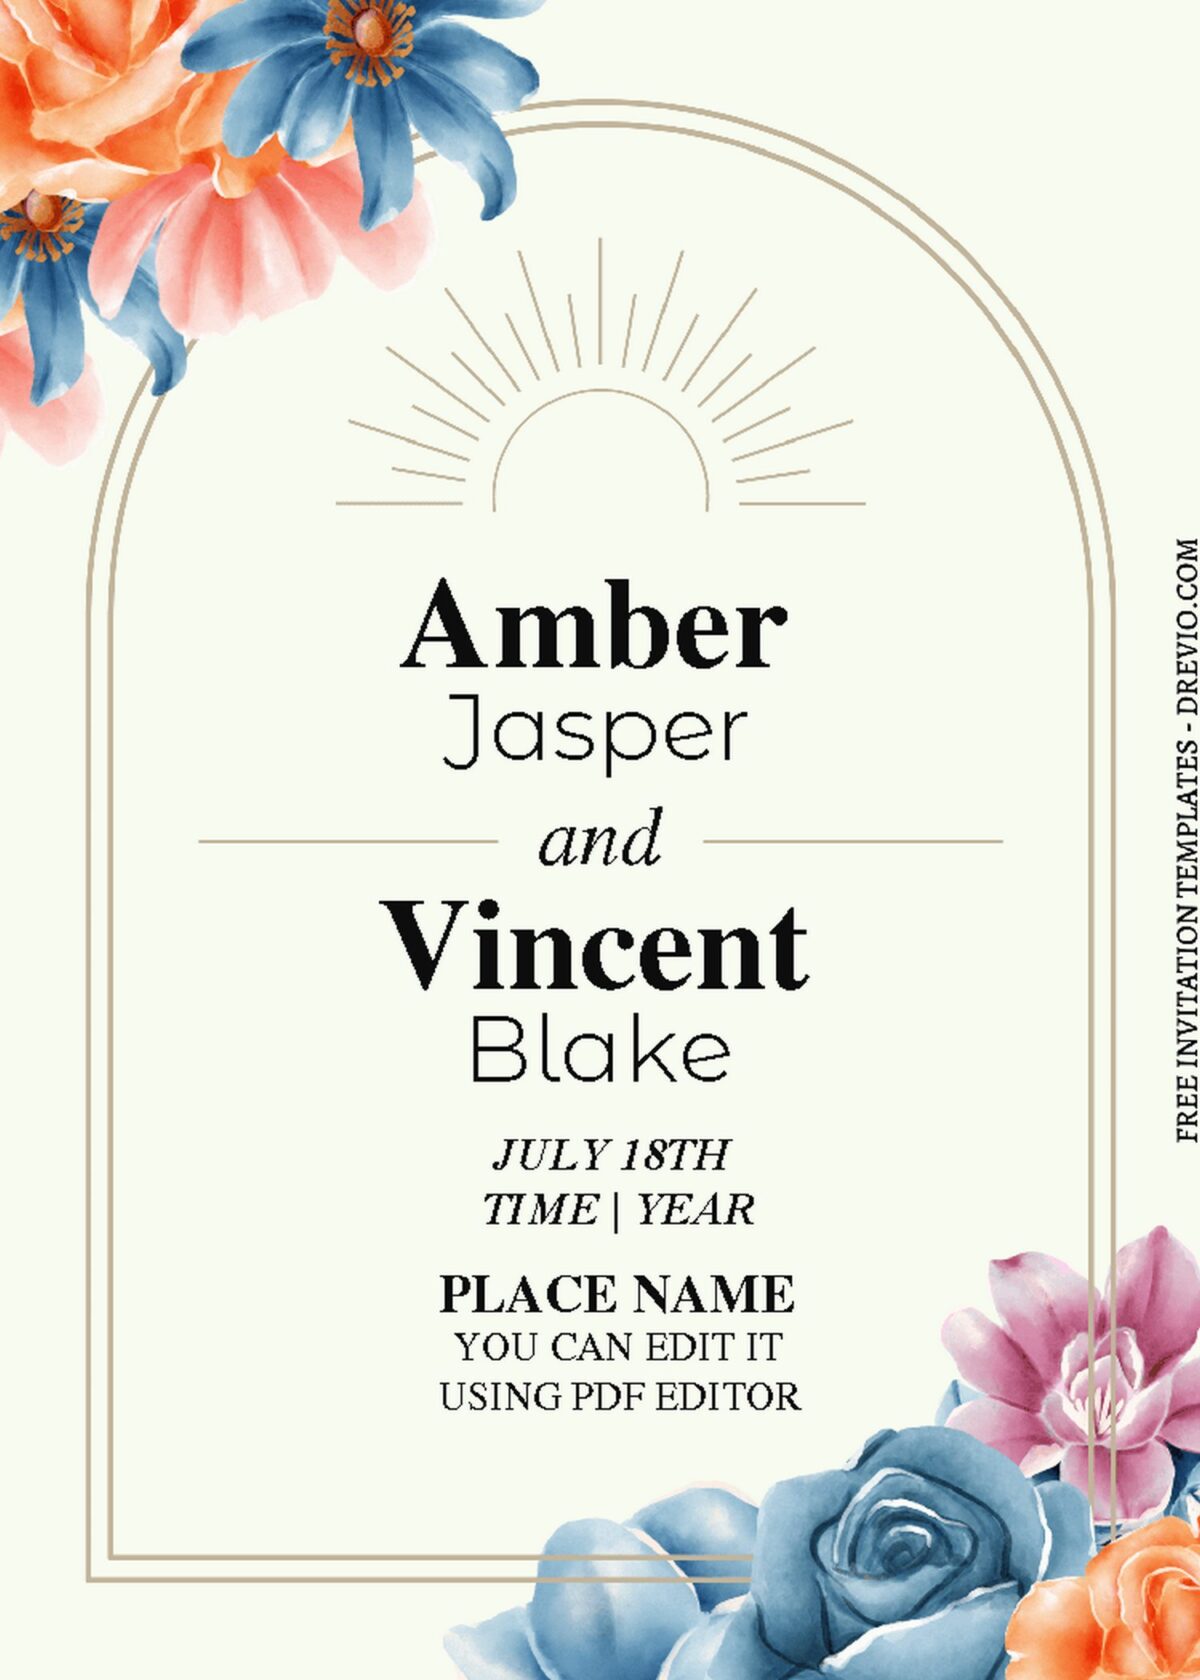 (Free Editable PDF) Bold & Vivid Wedding Invitation Templates with stunning white background